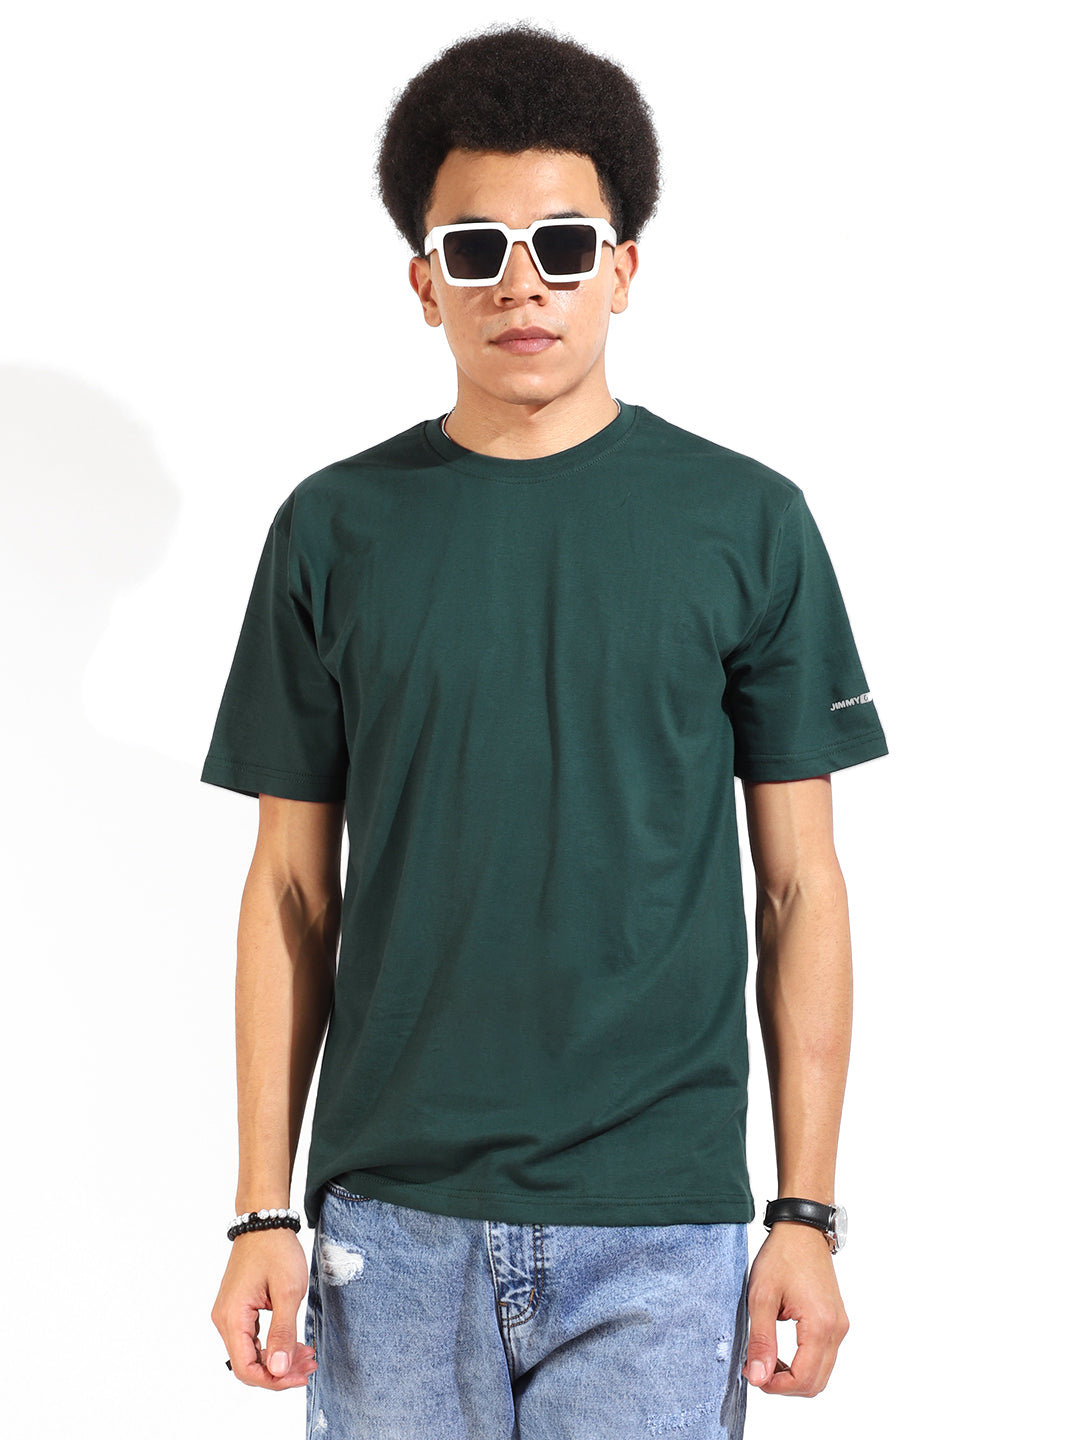 Green Cotton Slim Fit T-Shirt